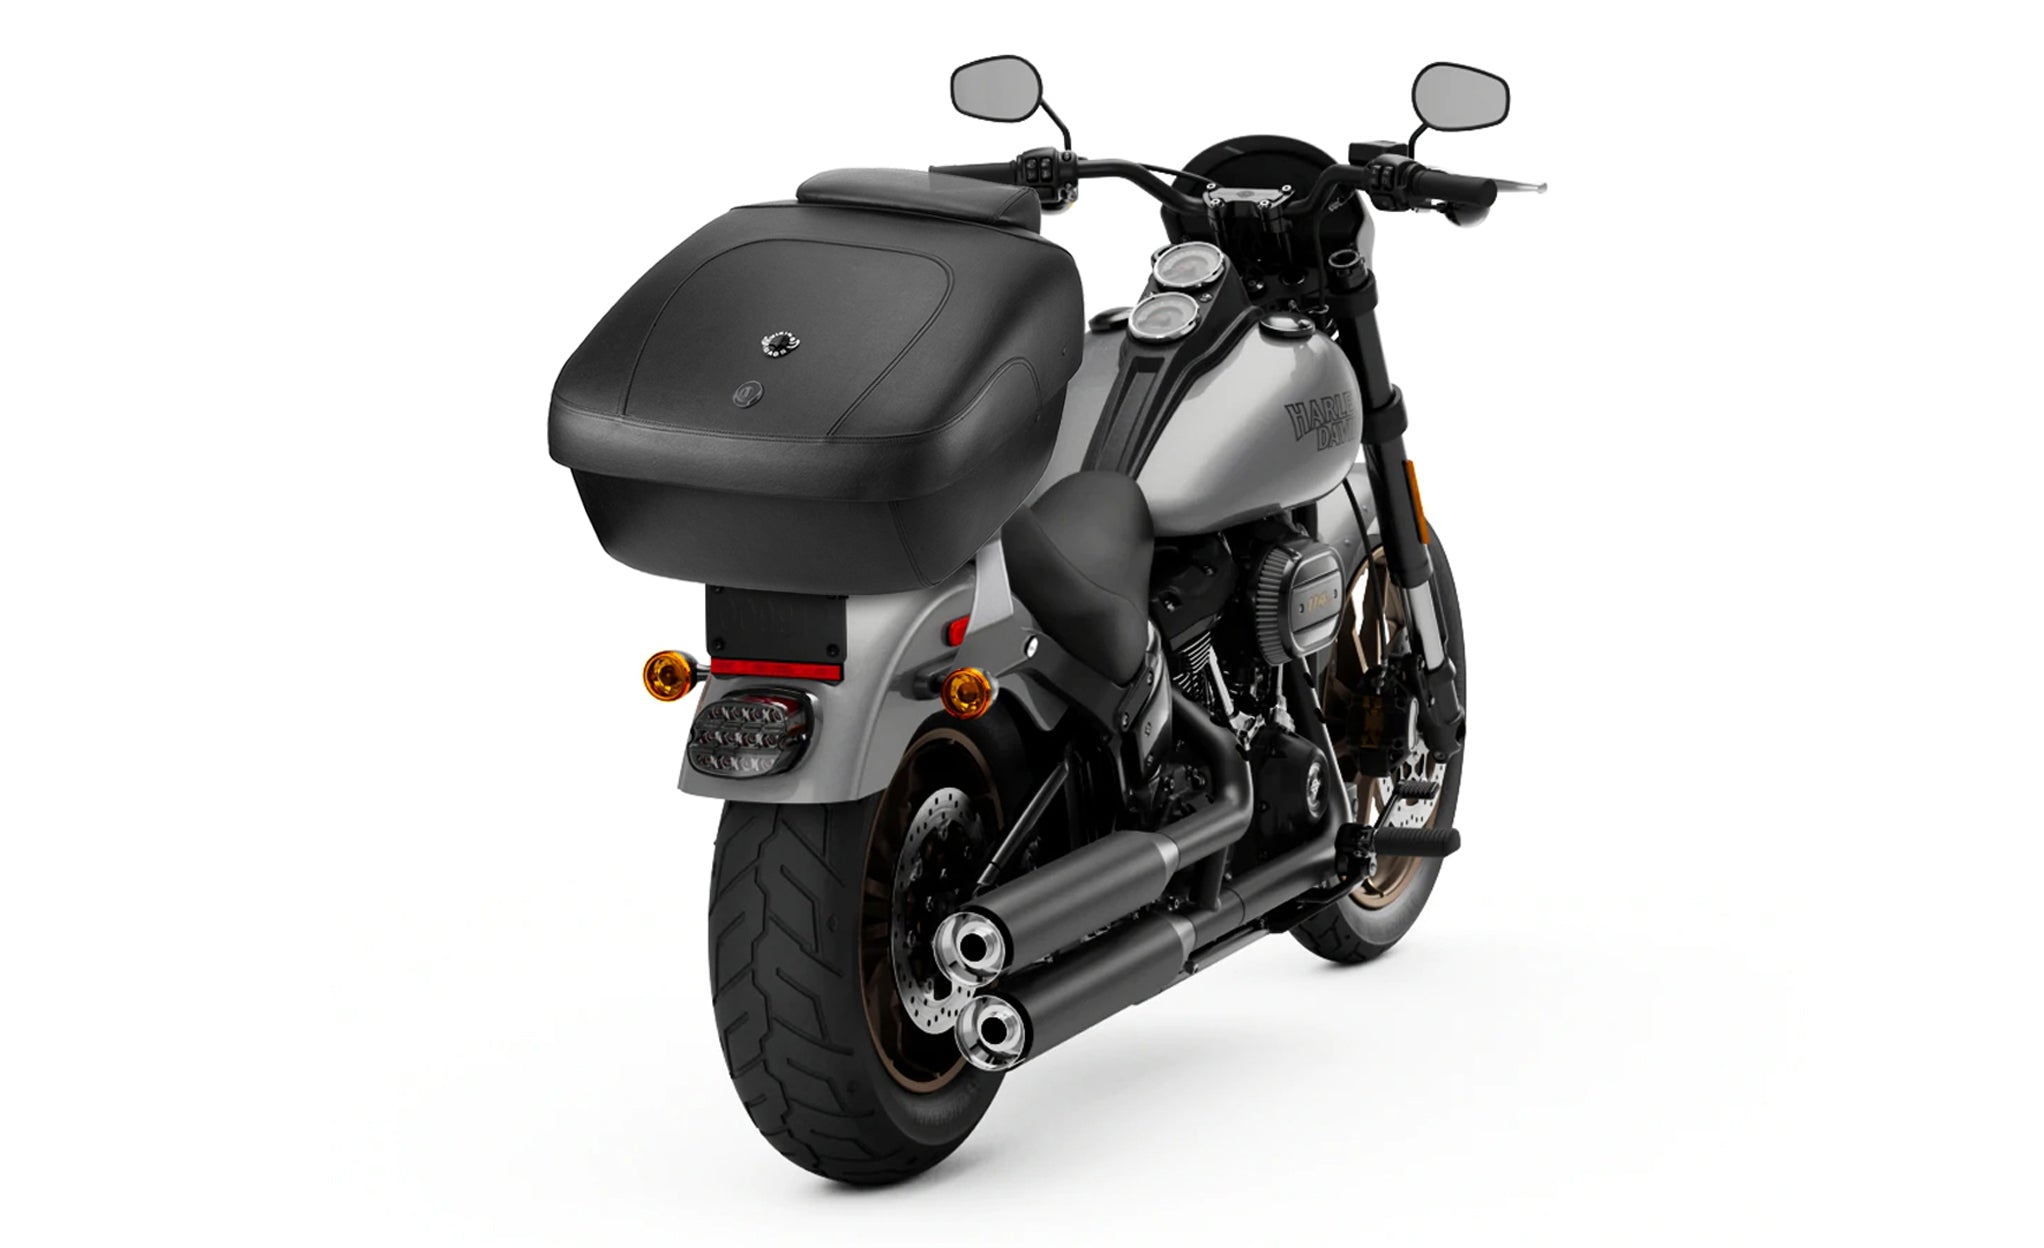 Viking Premium Extra Large Honda Leather Wrapped Hard Motorcycle Trunk Bag on Bike View @expand